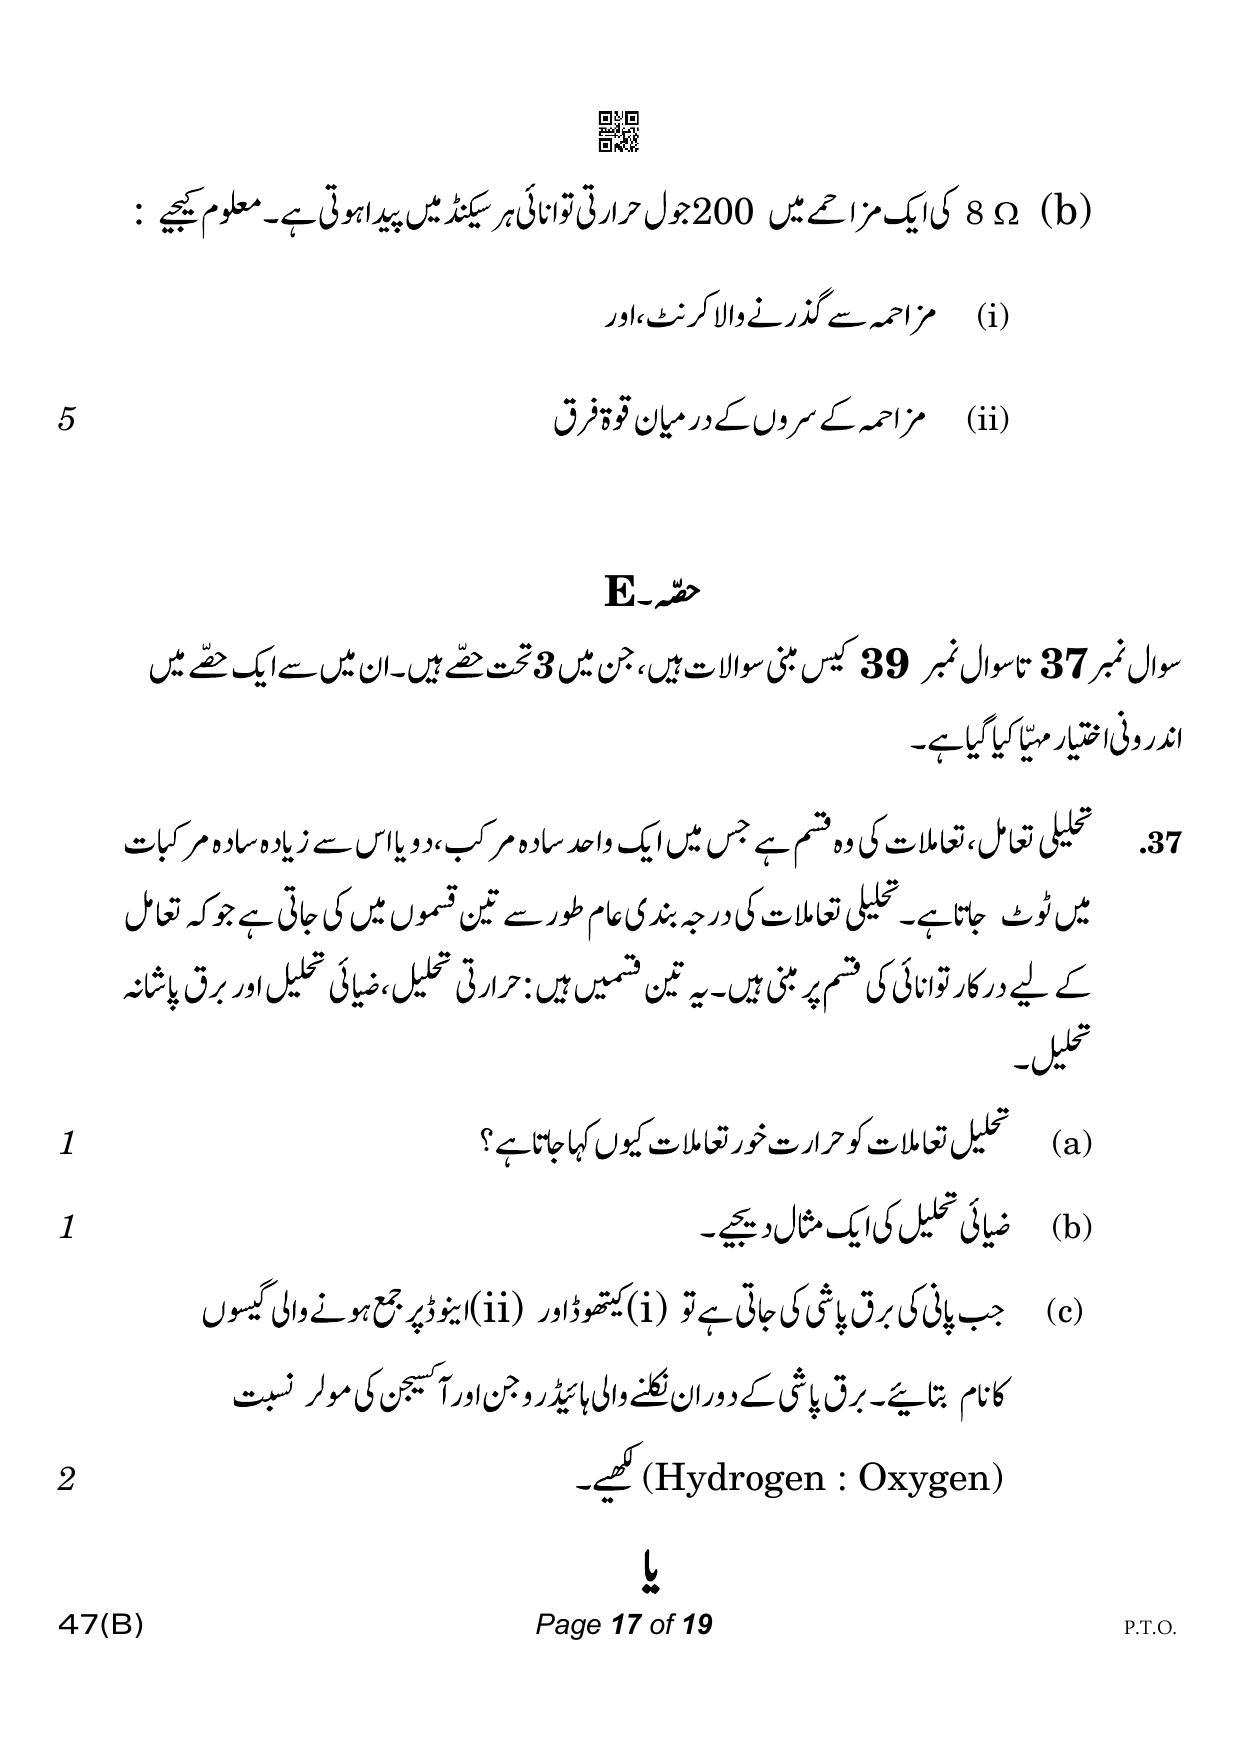 CBSE Class 10 47-B-5 Science for VI Urdu Version 2023 Question Paper - Page 17